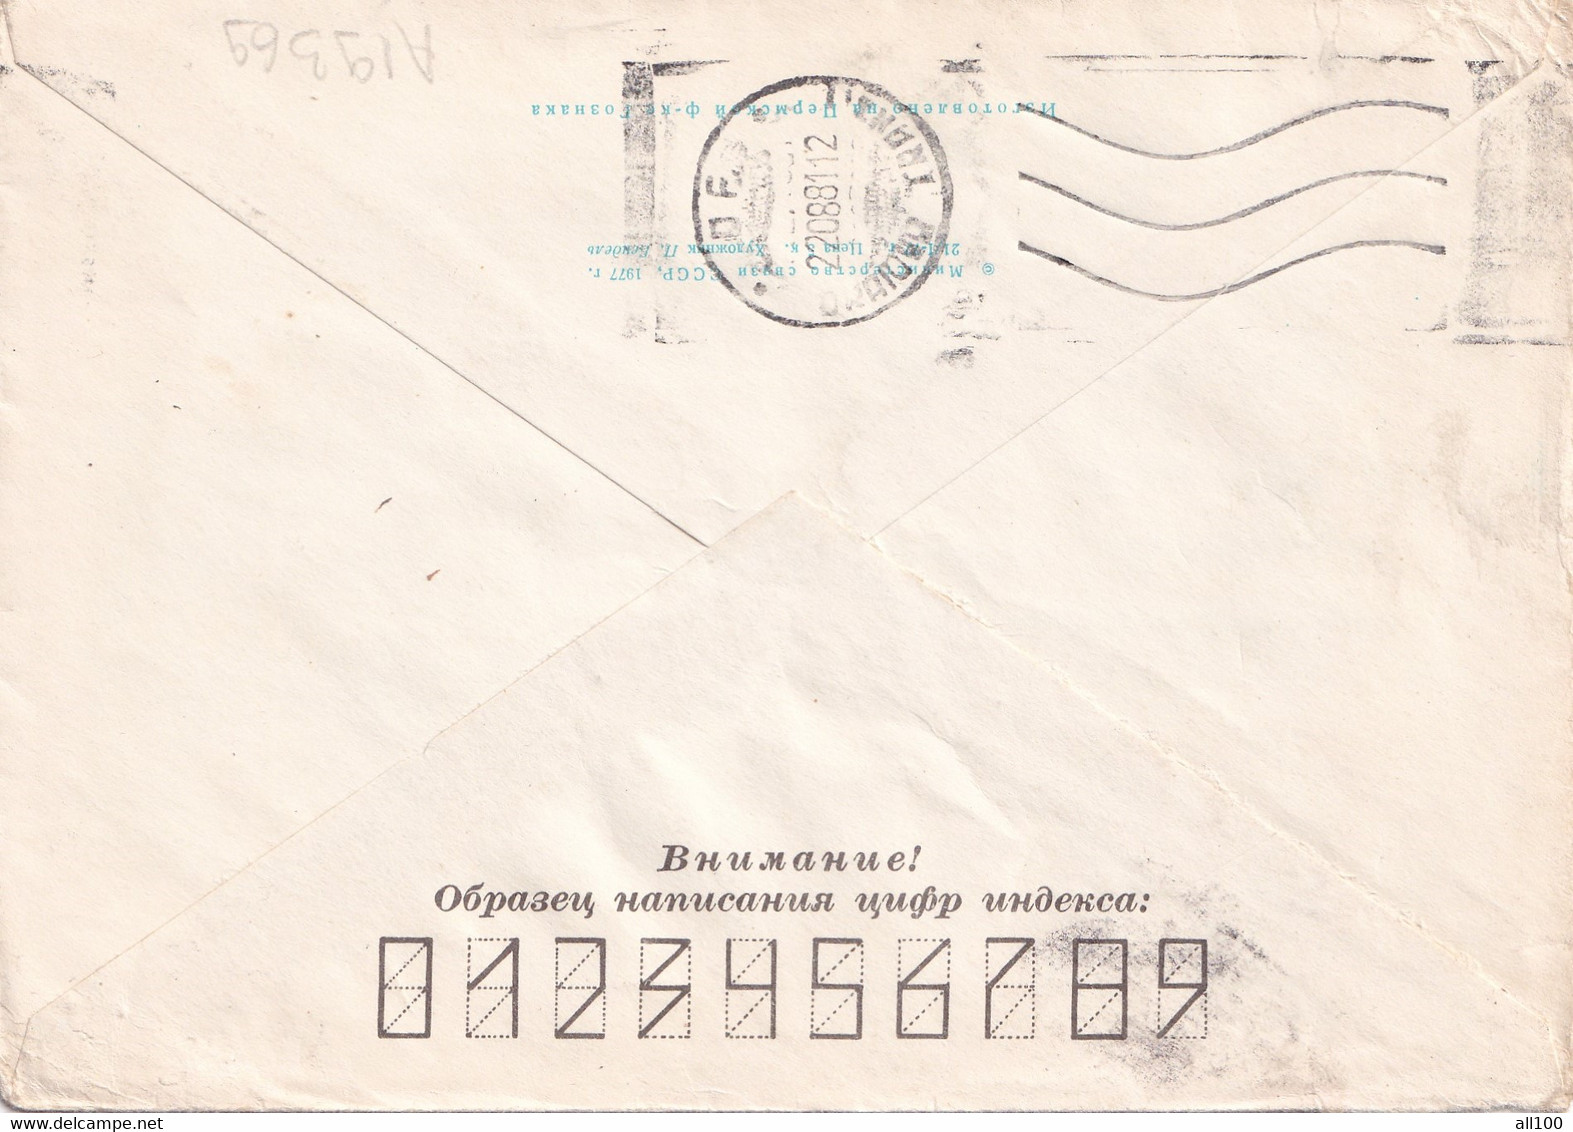 A19369 - A S NOVIKOV RUSSIAN SOVIET WRITER COVER ENVELOPE USED 1981 SOVIET UNION USSR SENT TO CRAIOVA ROMANIA RSR - Cartas & Documentos